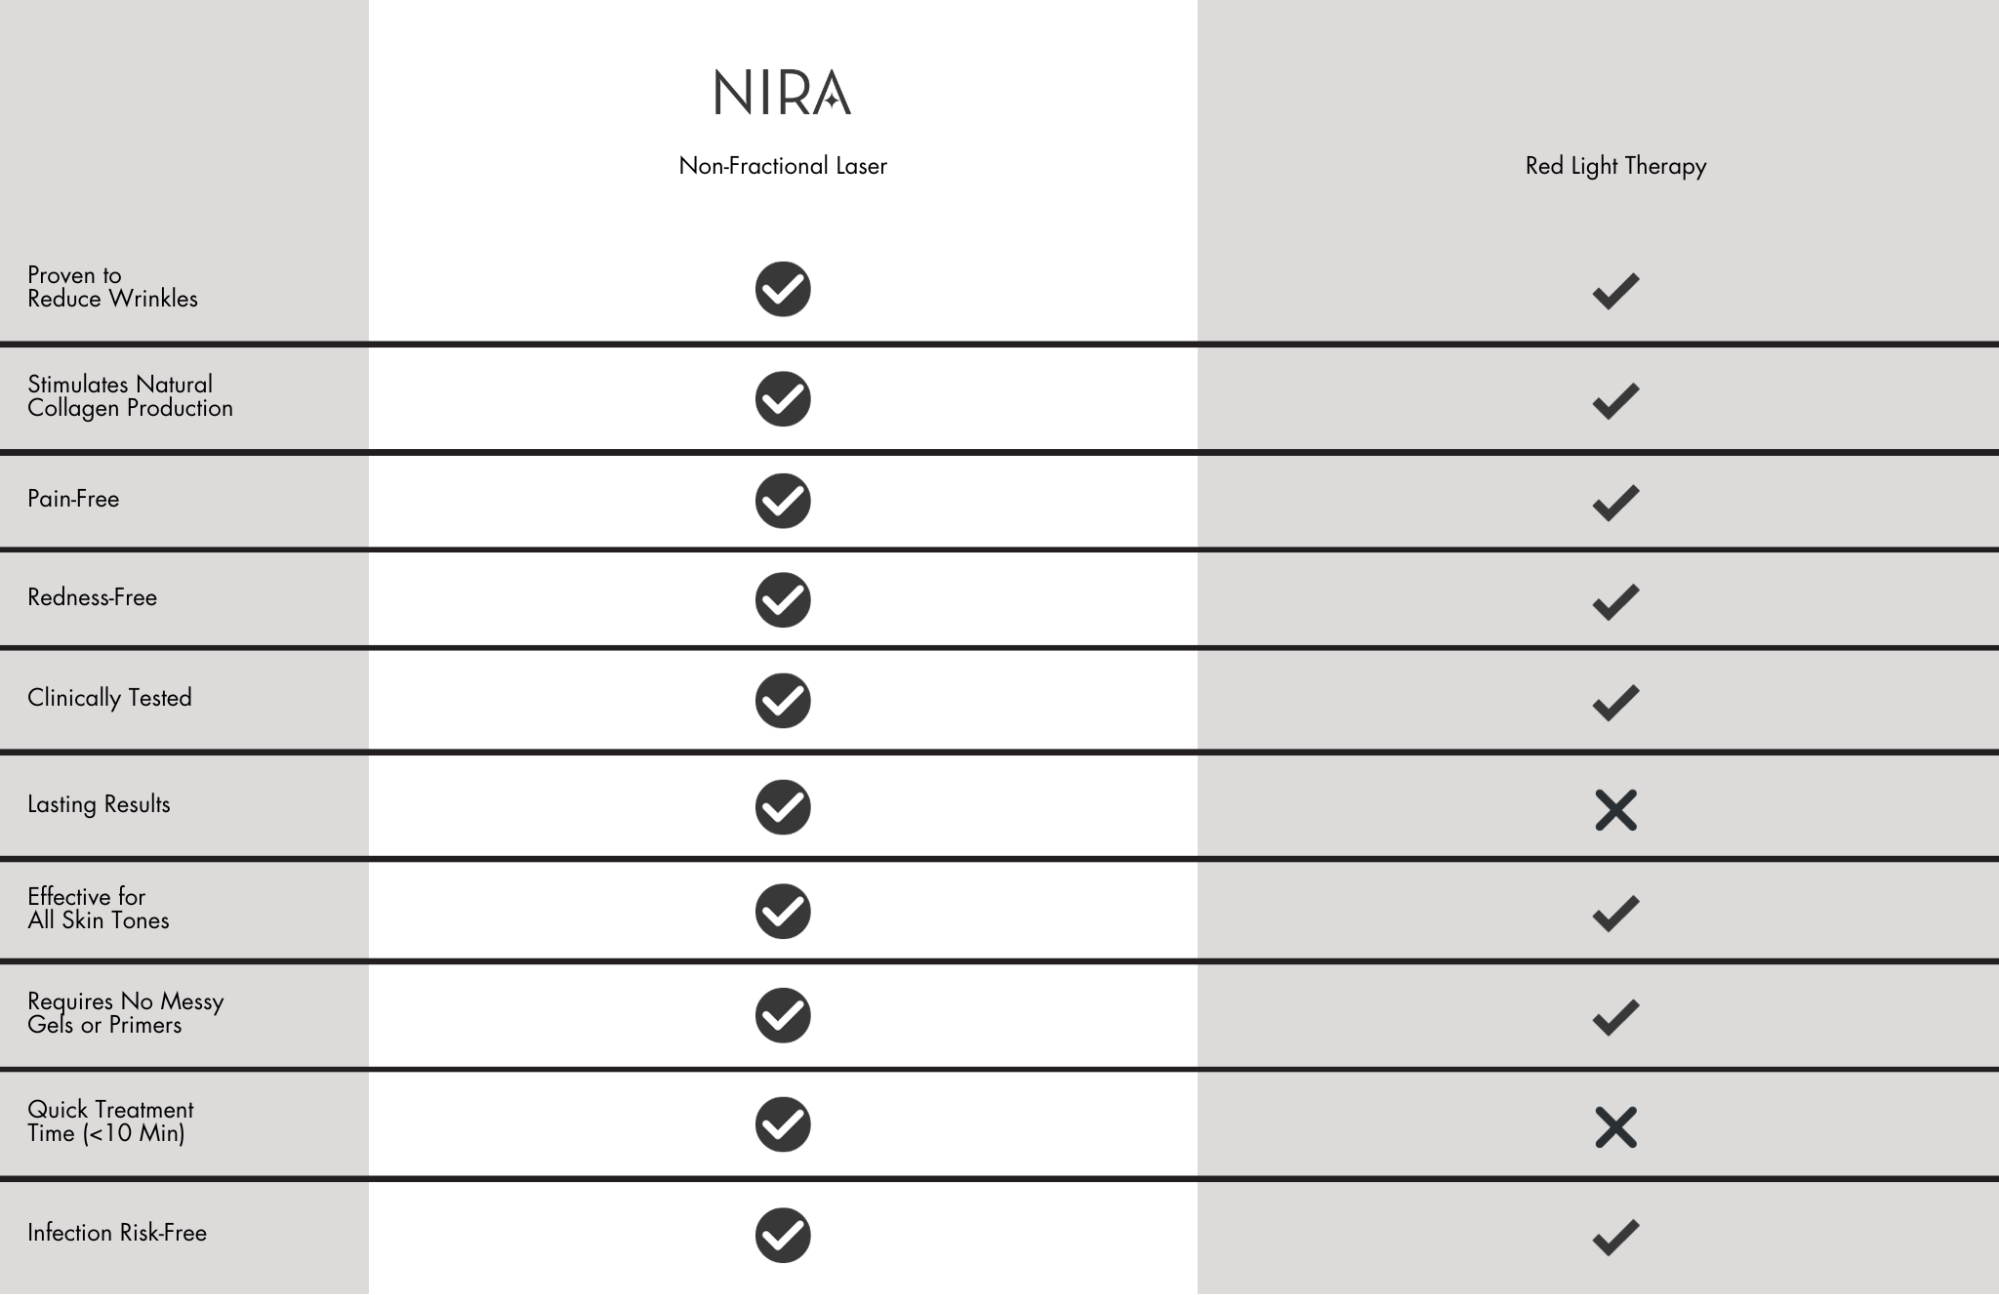 NIRA Laser vs Red Light Therapy comparison chart